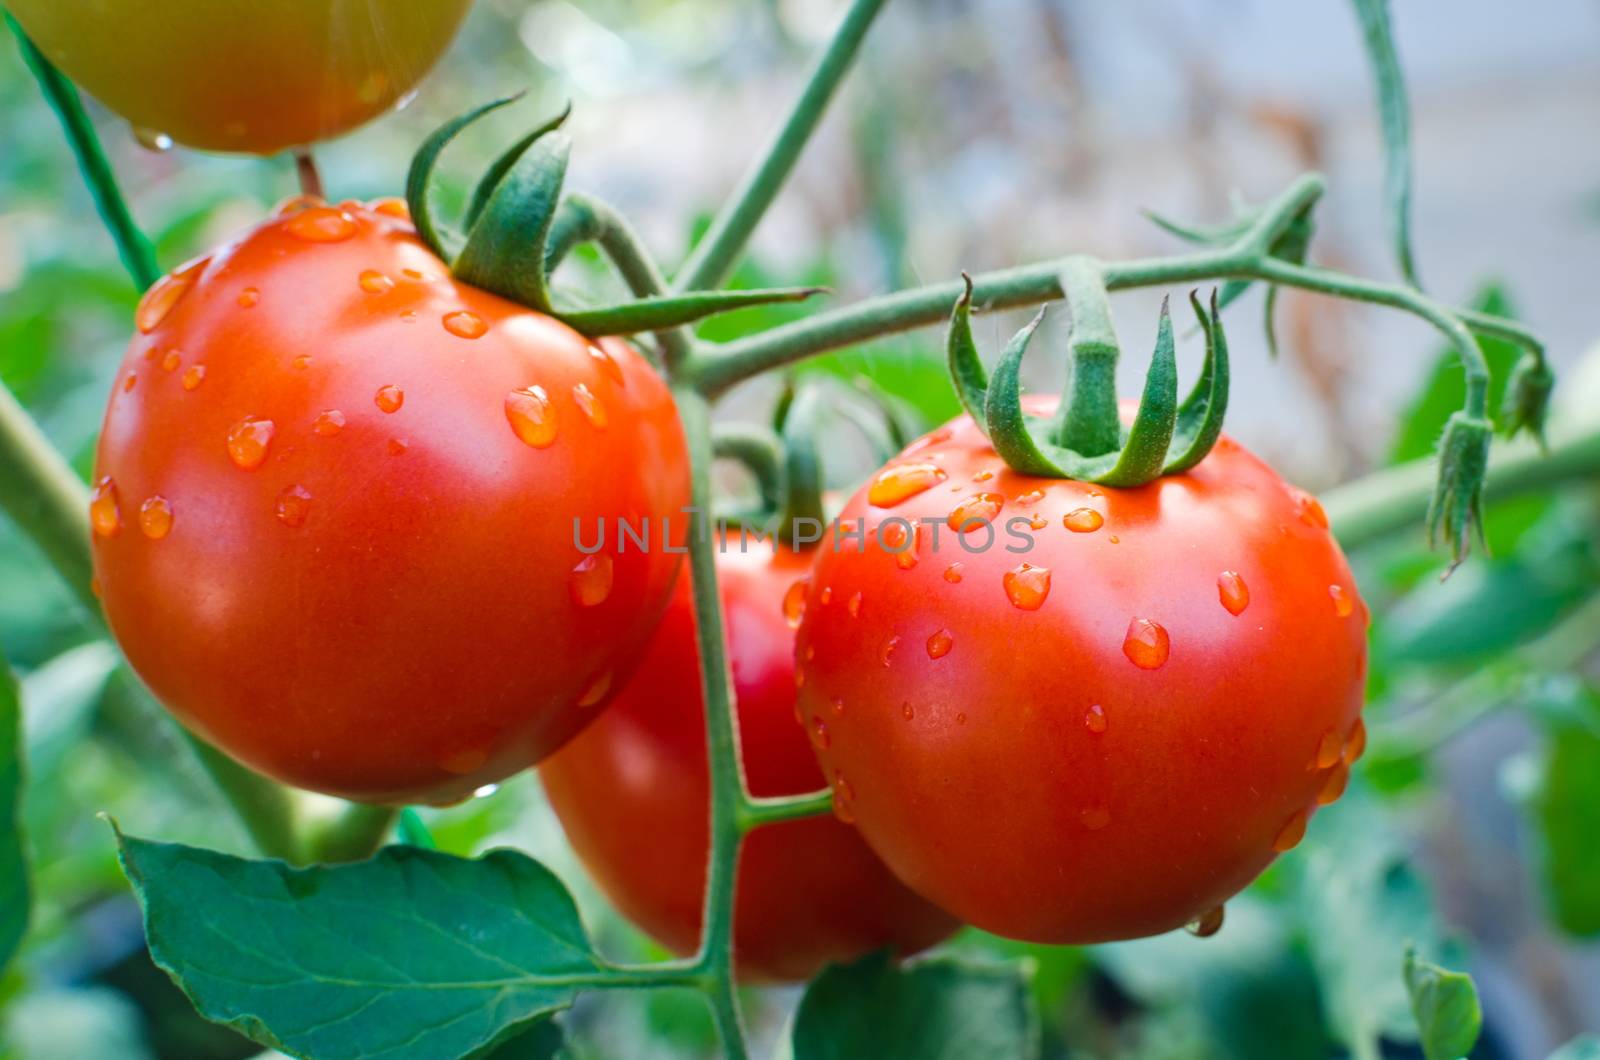 Tomatoes grown in the organic garden.